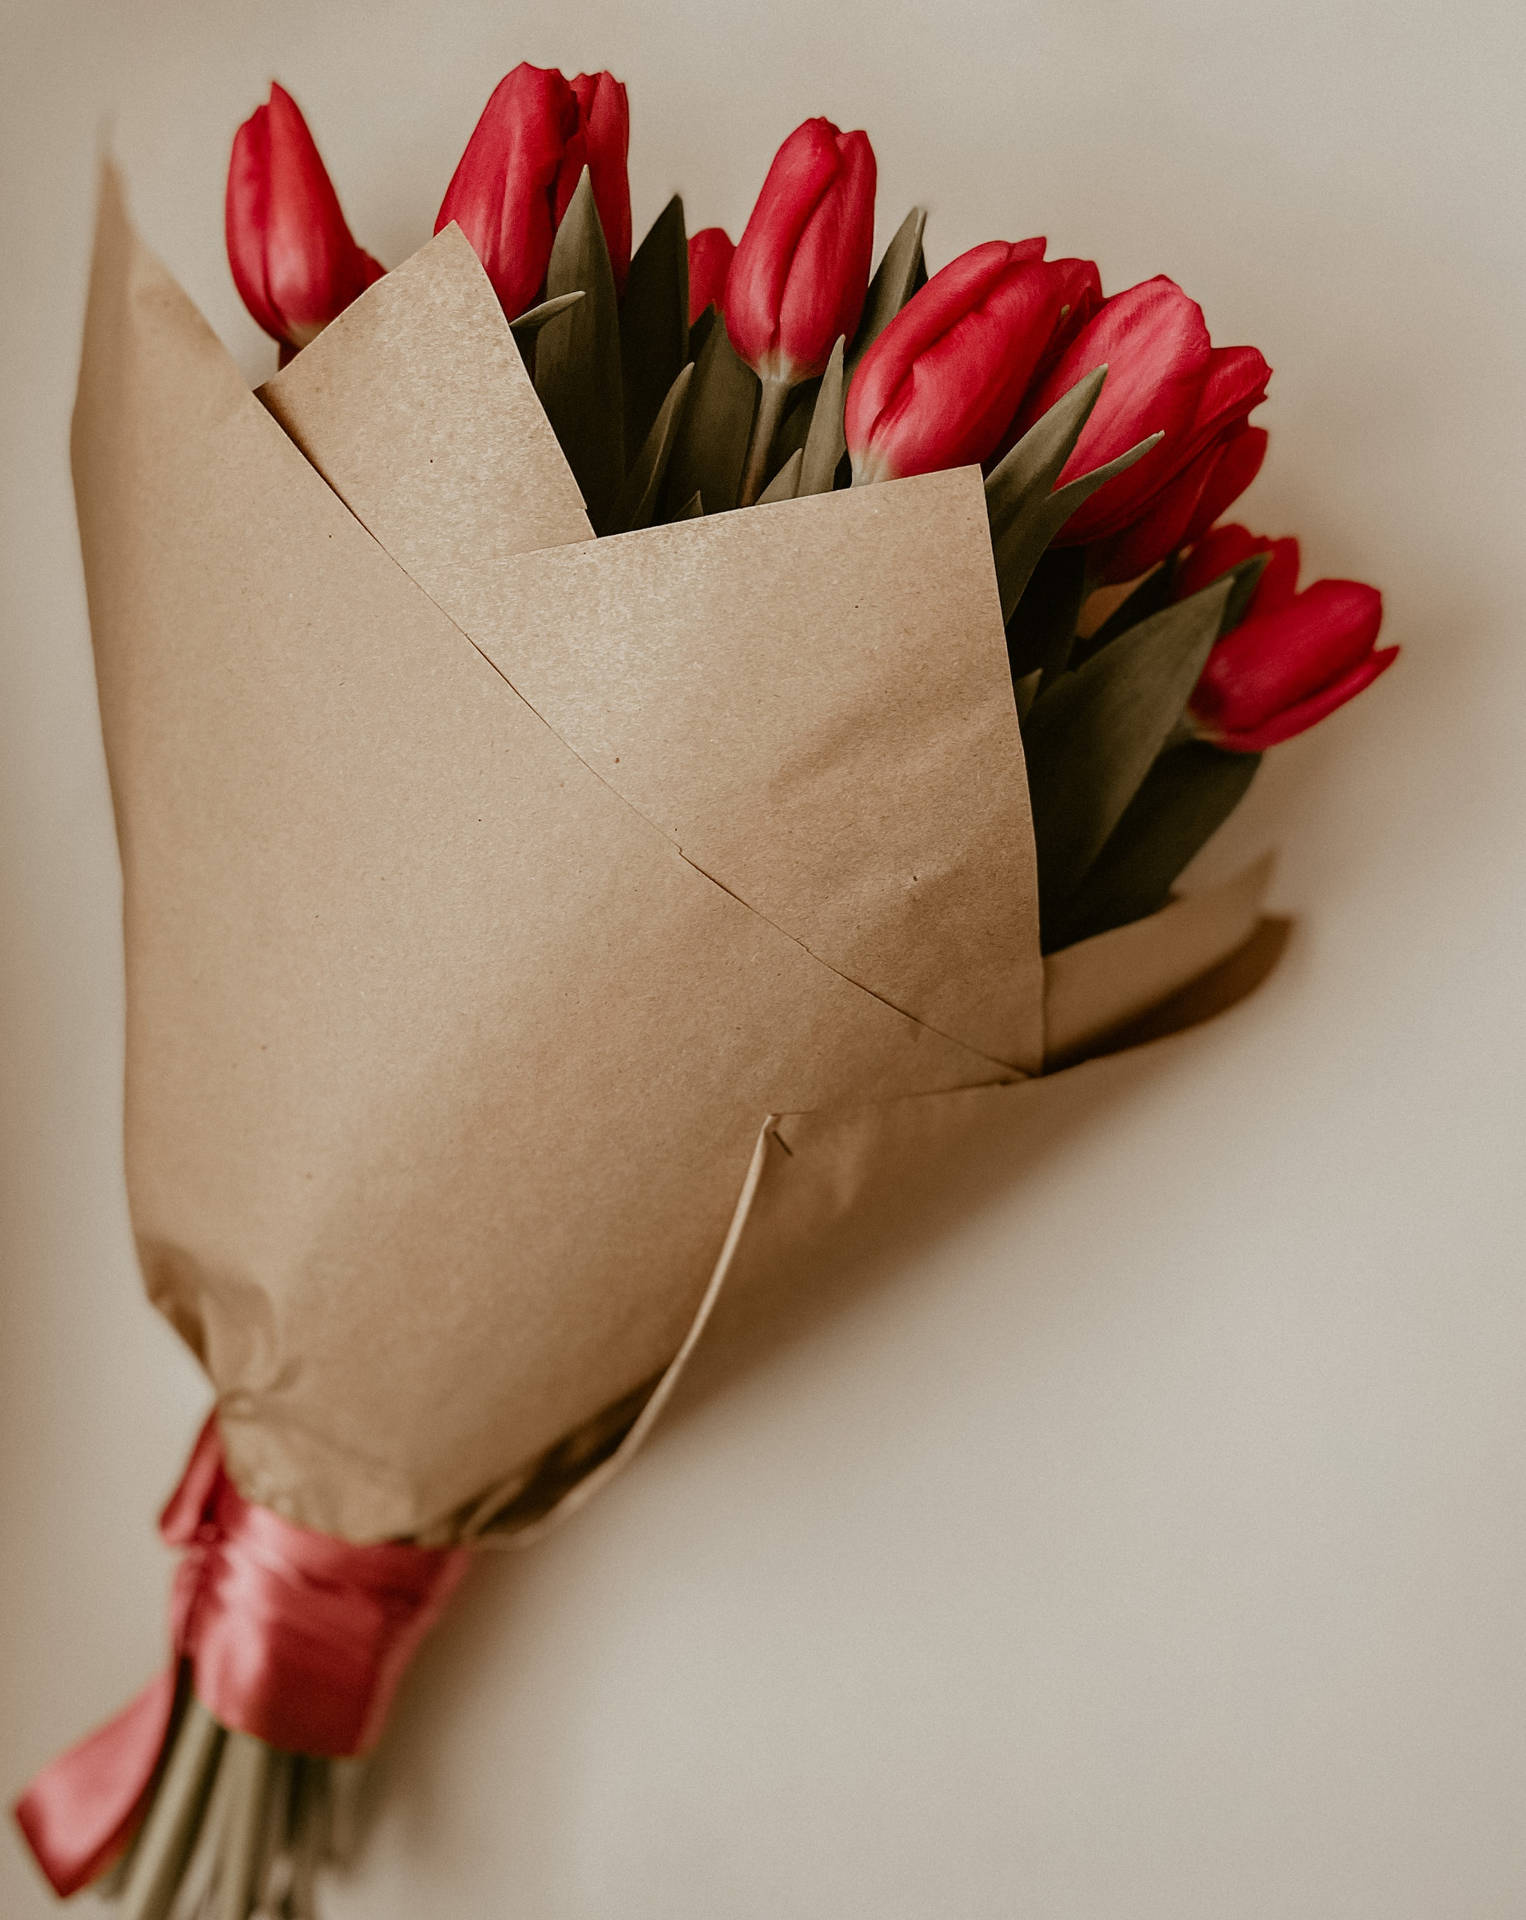 Ramitofresco De Flores De Tulipanes Rojos. Fondo de pantalla